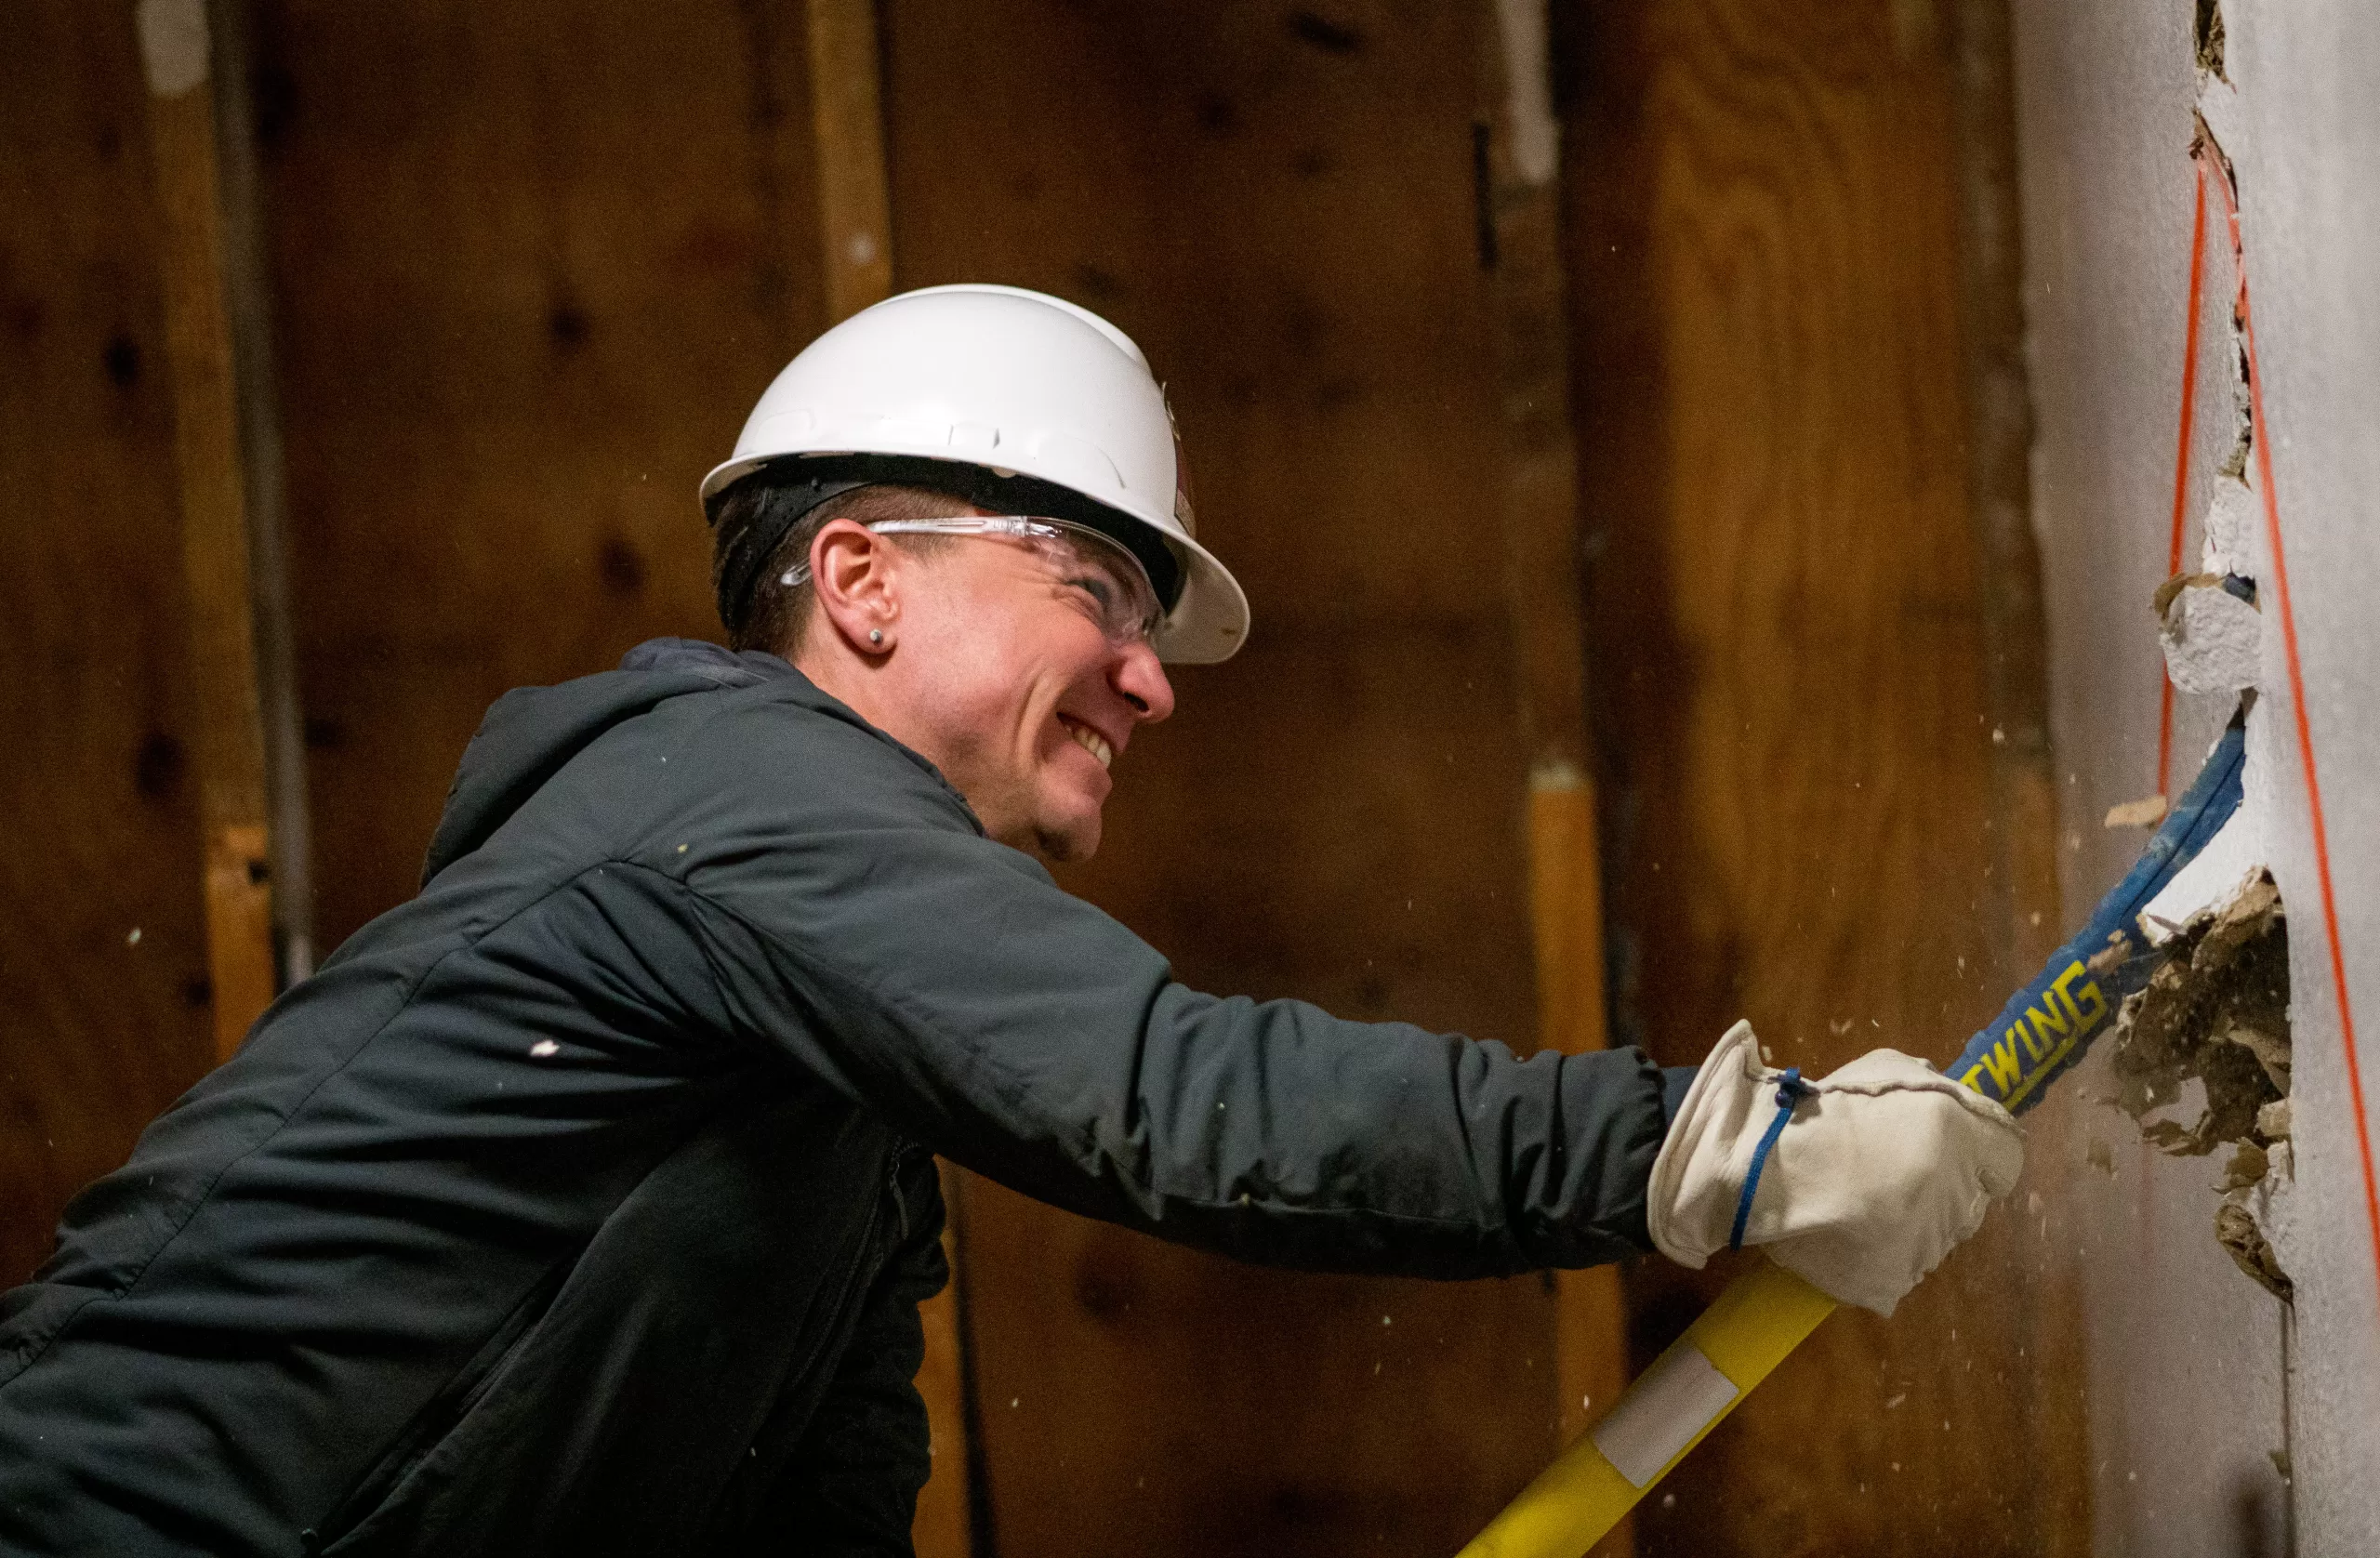 man wearing construction helmet breaks drywall with sledge hammer.